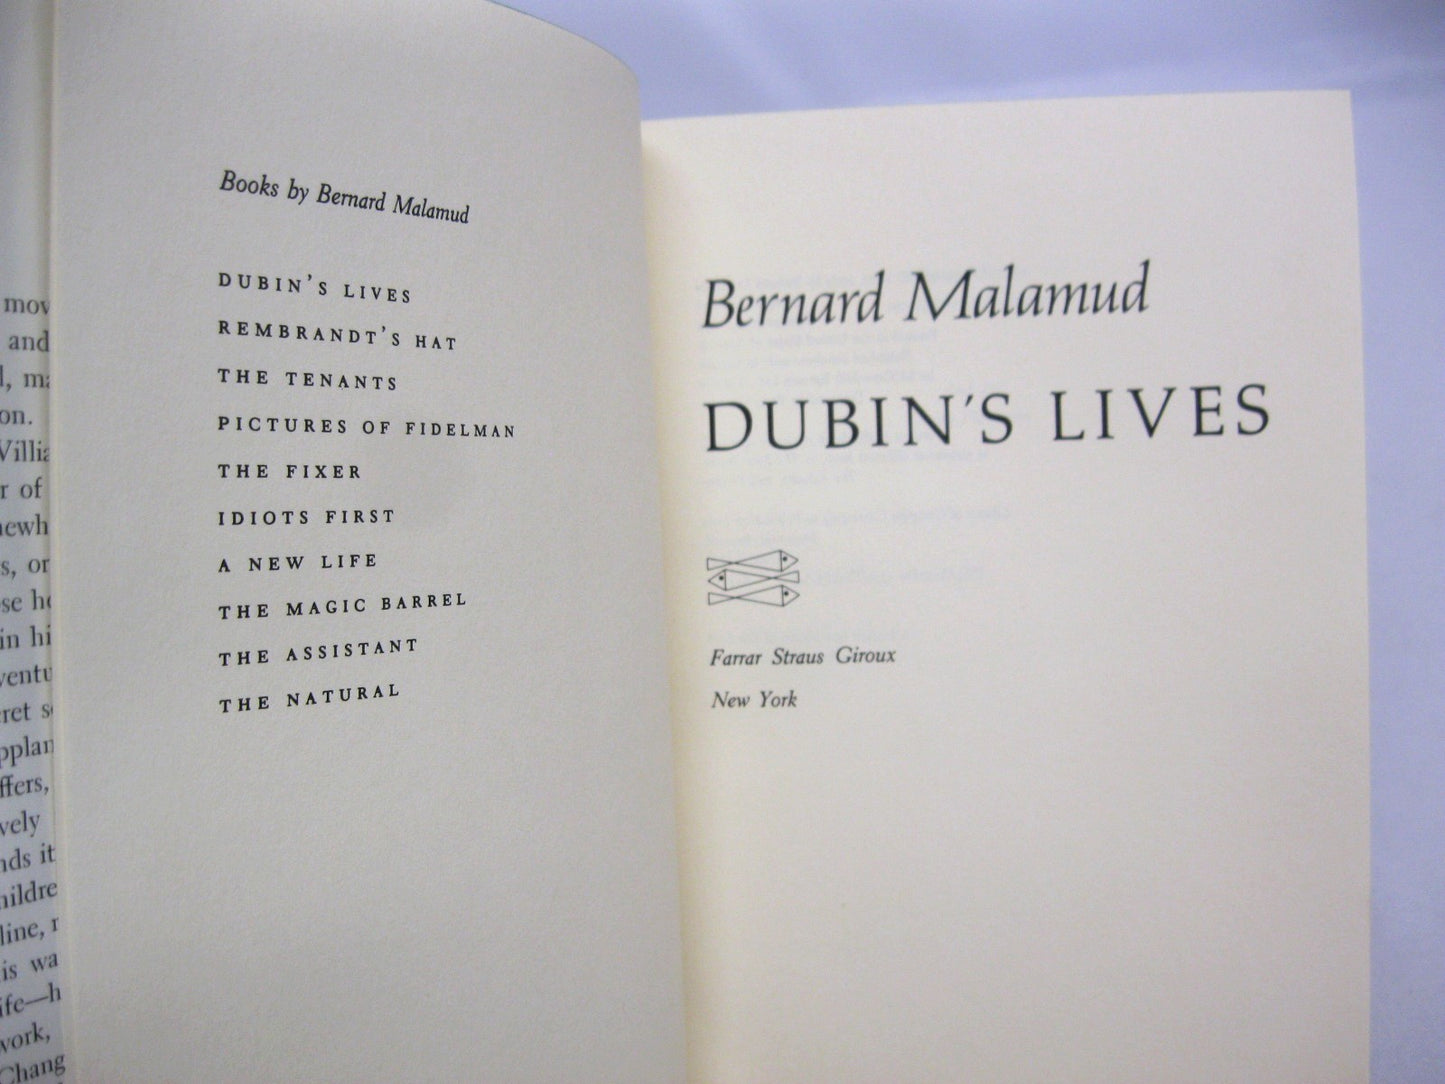 Dubin's Lives by Bernard Malamud